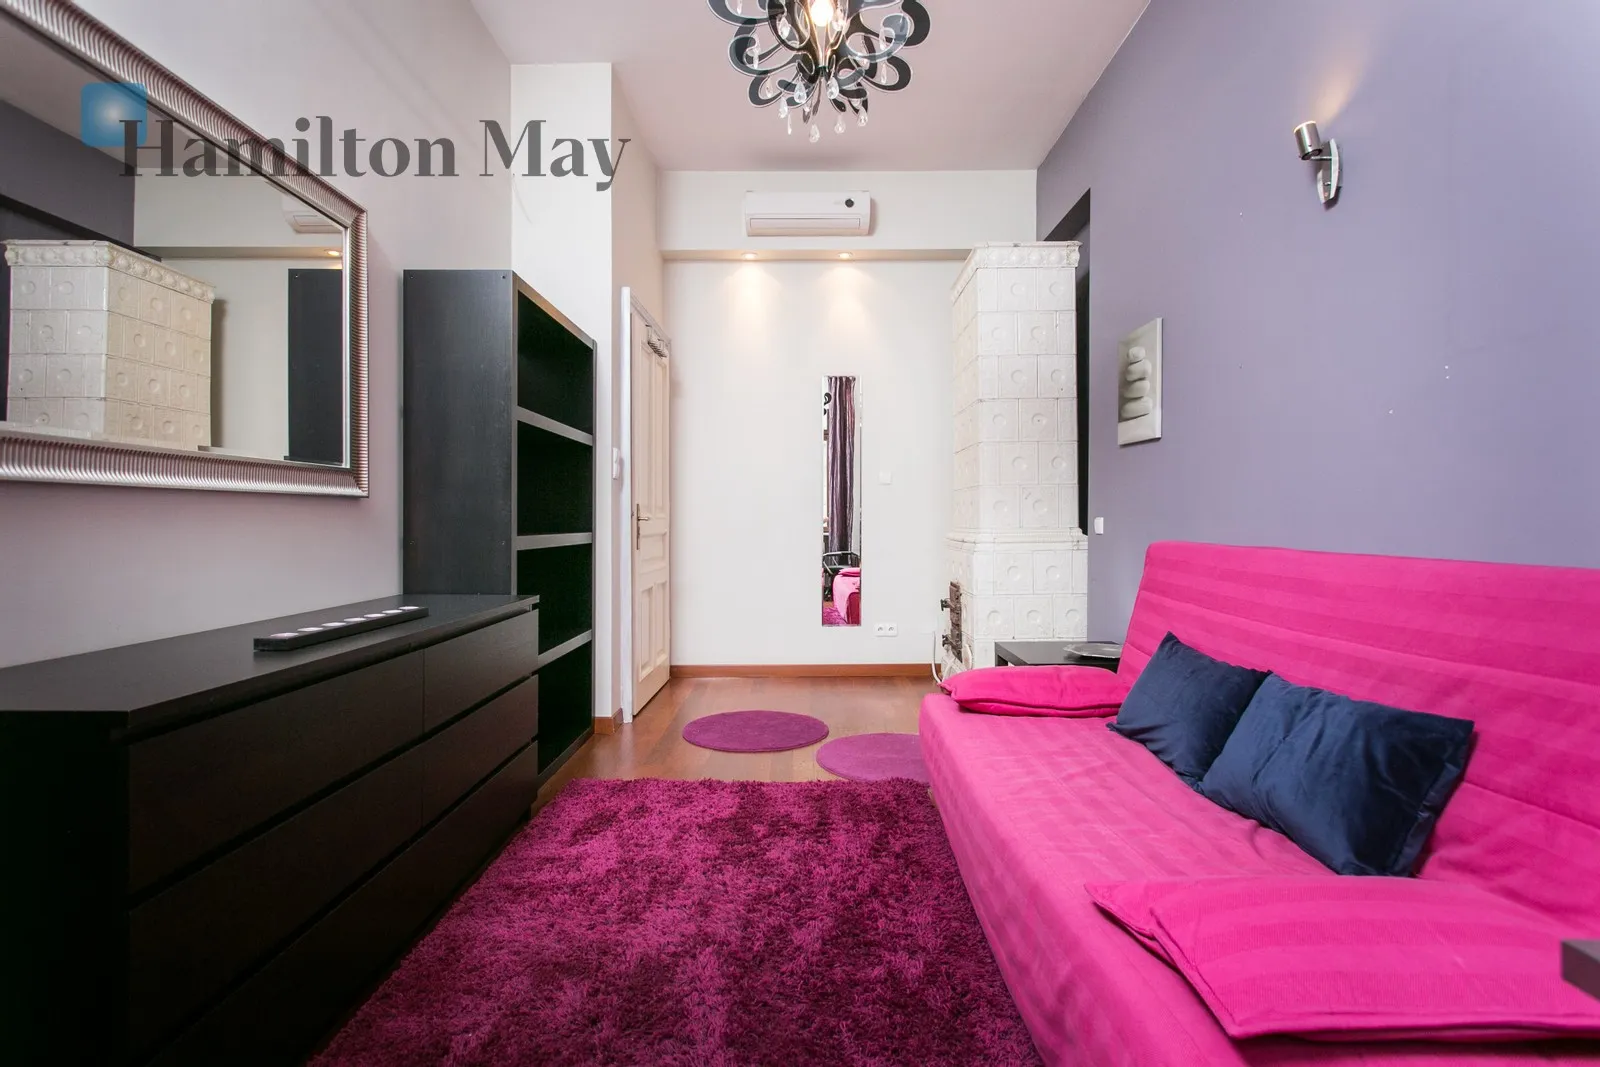 Price: 8500 PLN Bedrooms: 3 Bathrooms: 2 Size: 120m2 Price/m2: 71 PLN